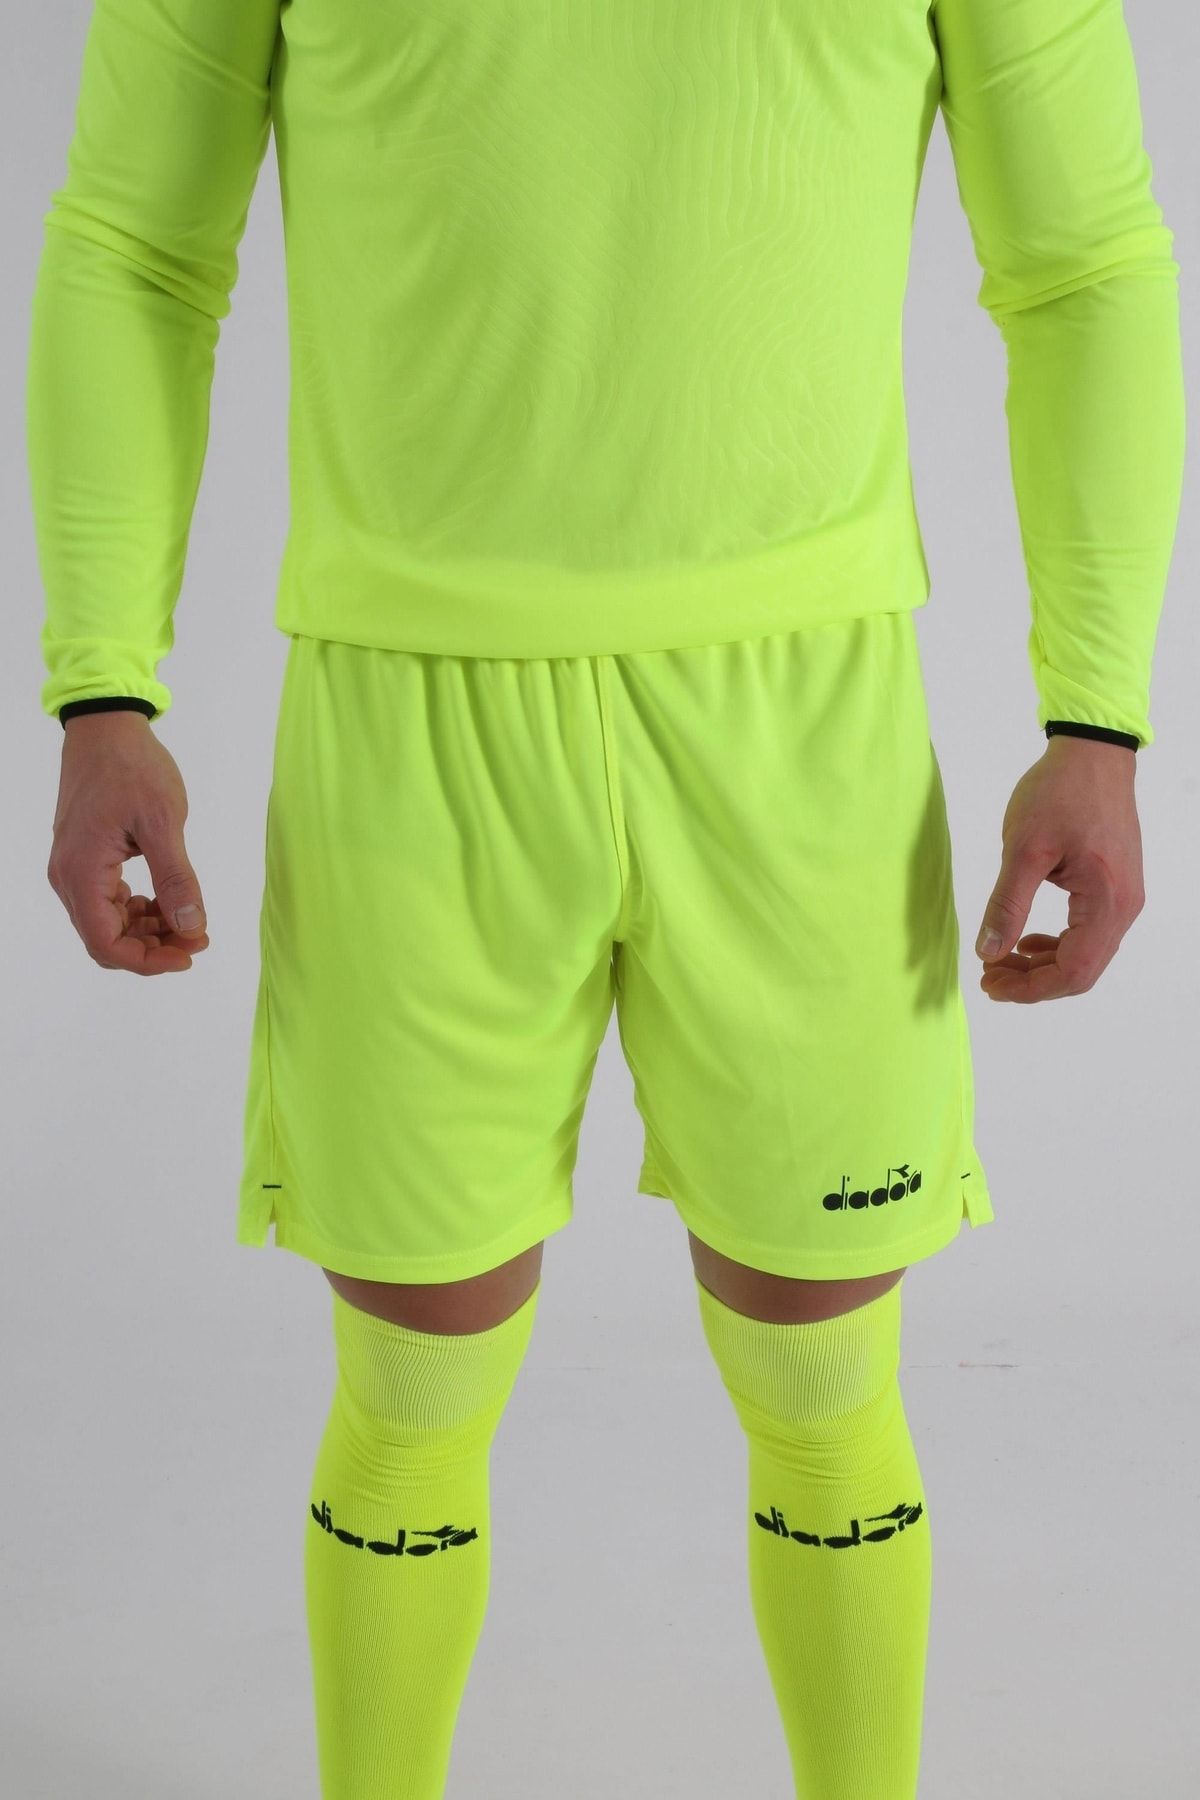 Diadora Elite Futbol Kaleci Forma Şortu Neon Sarı